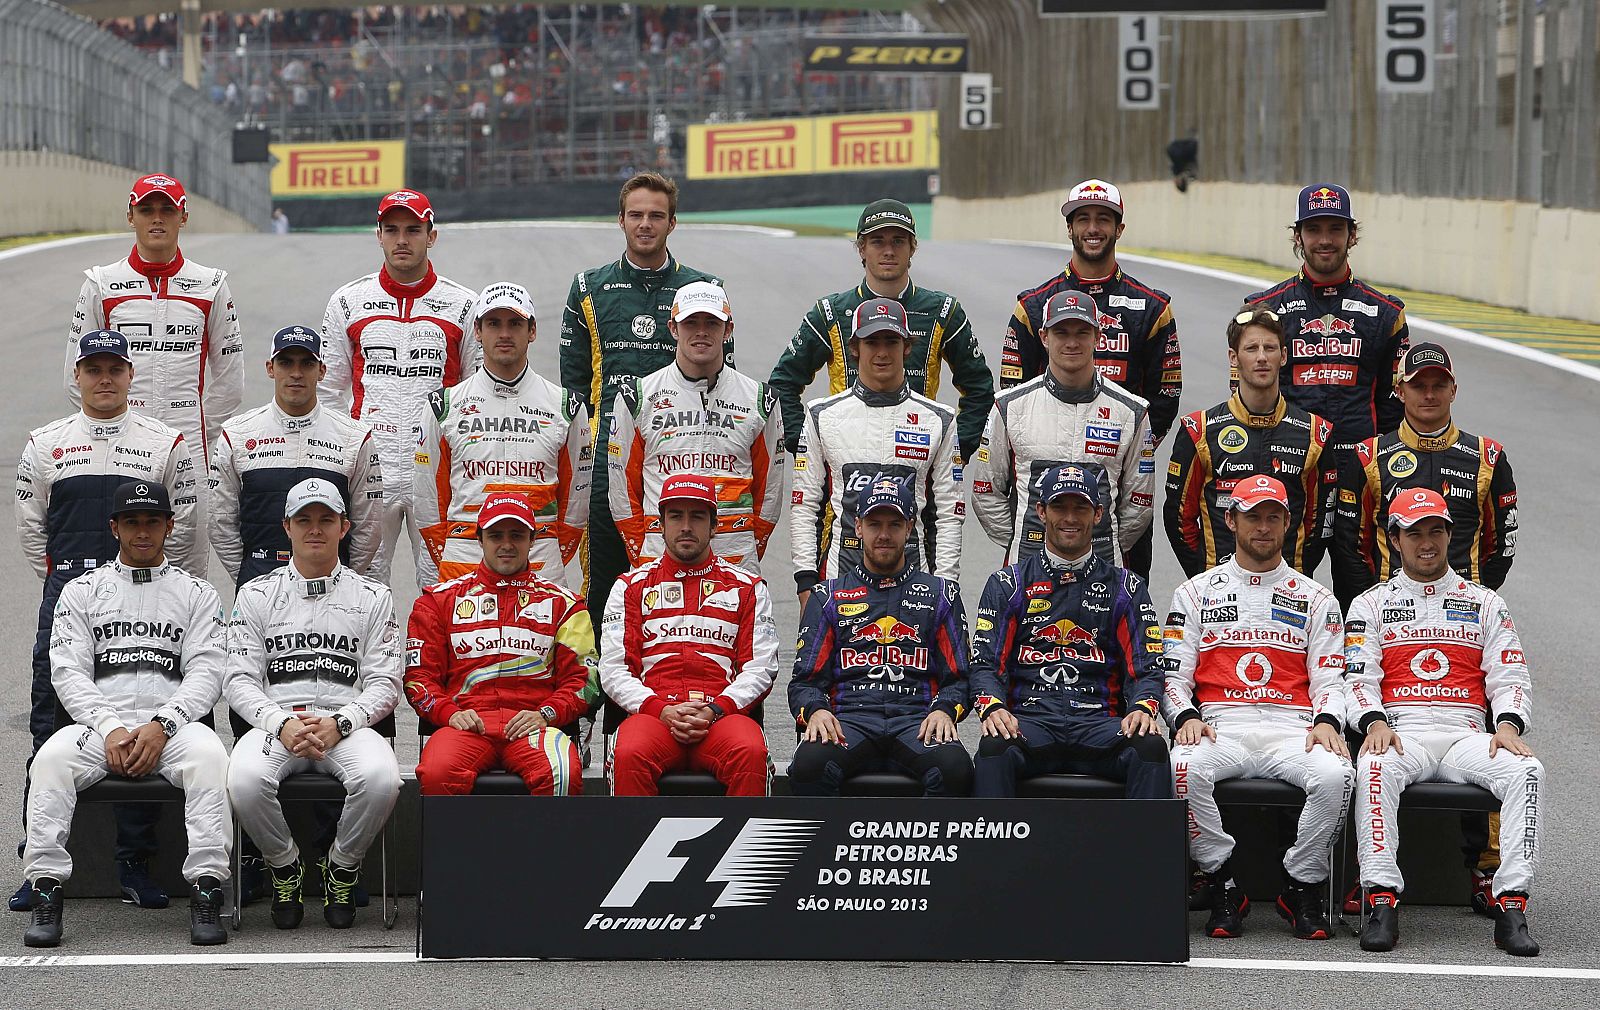 Pilotos de Fórmula 1 en el Mundial de 2013